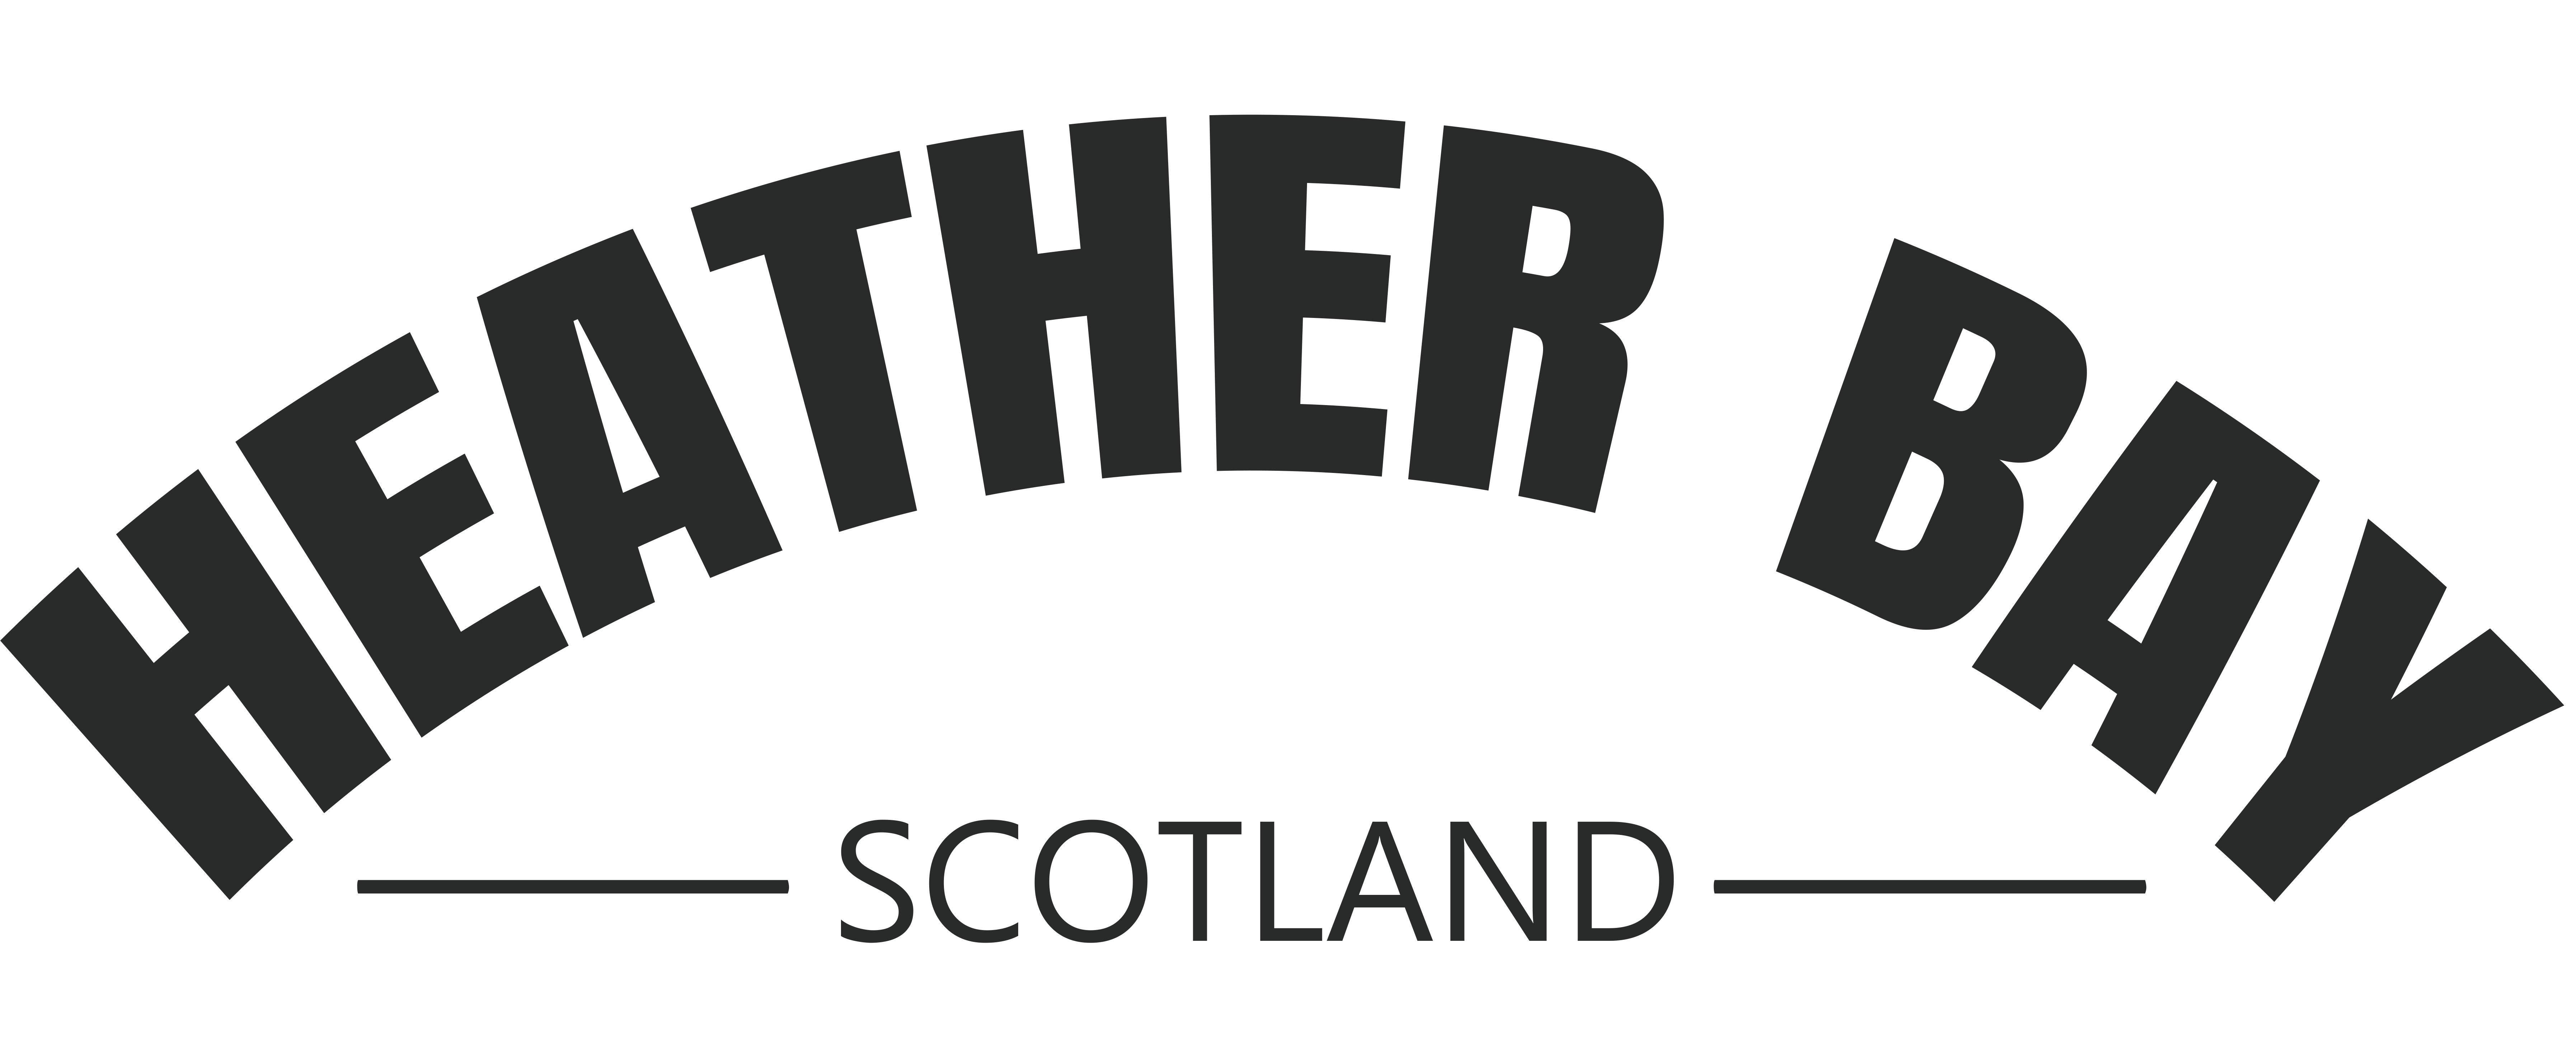 Heather Bay Scotland